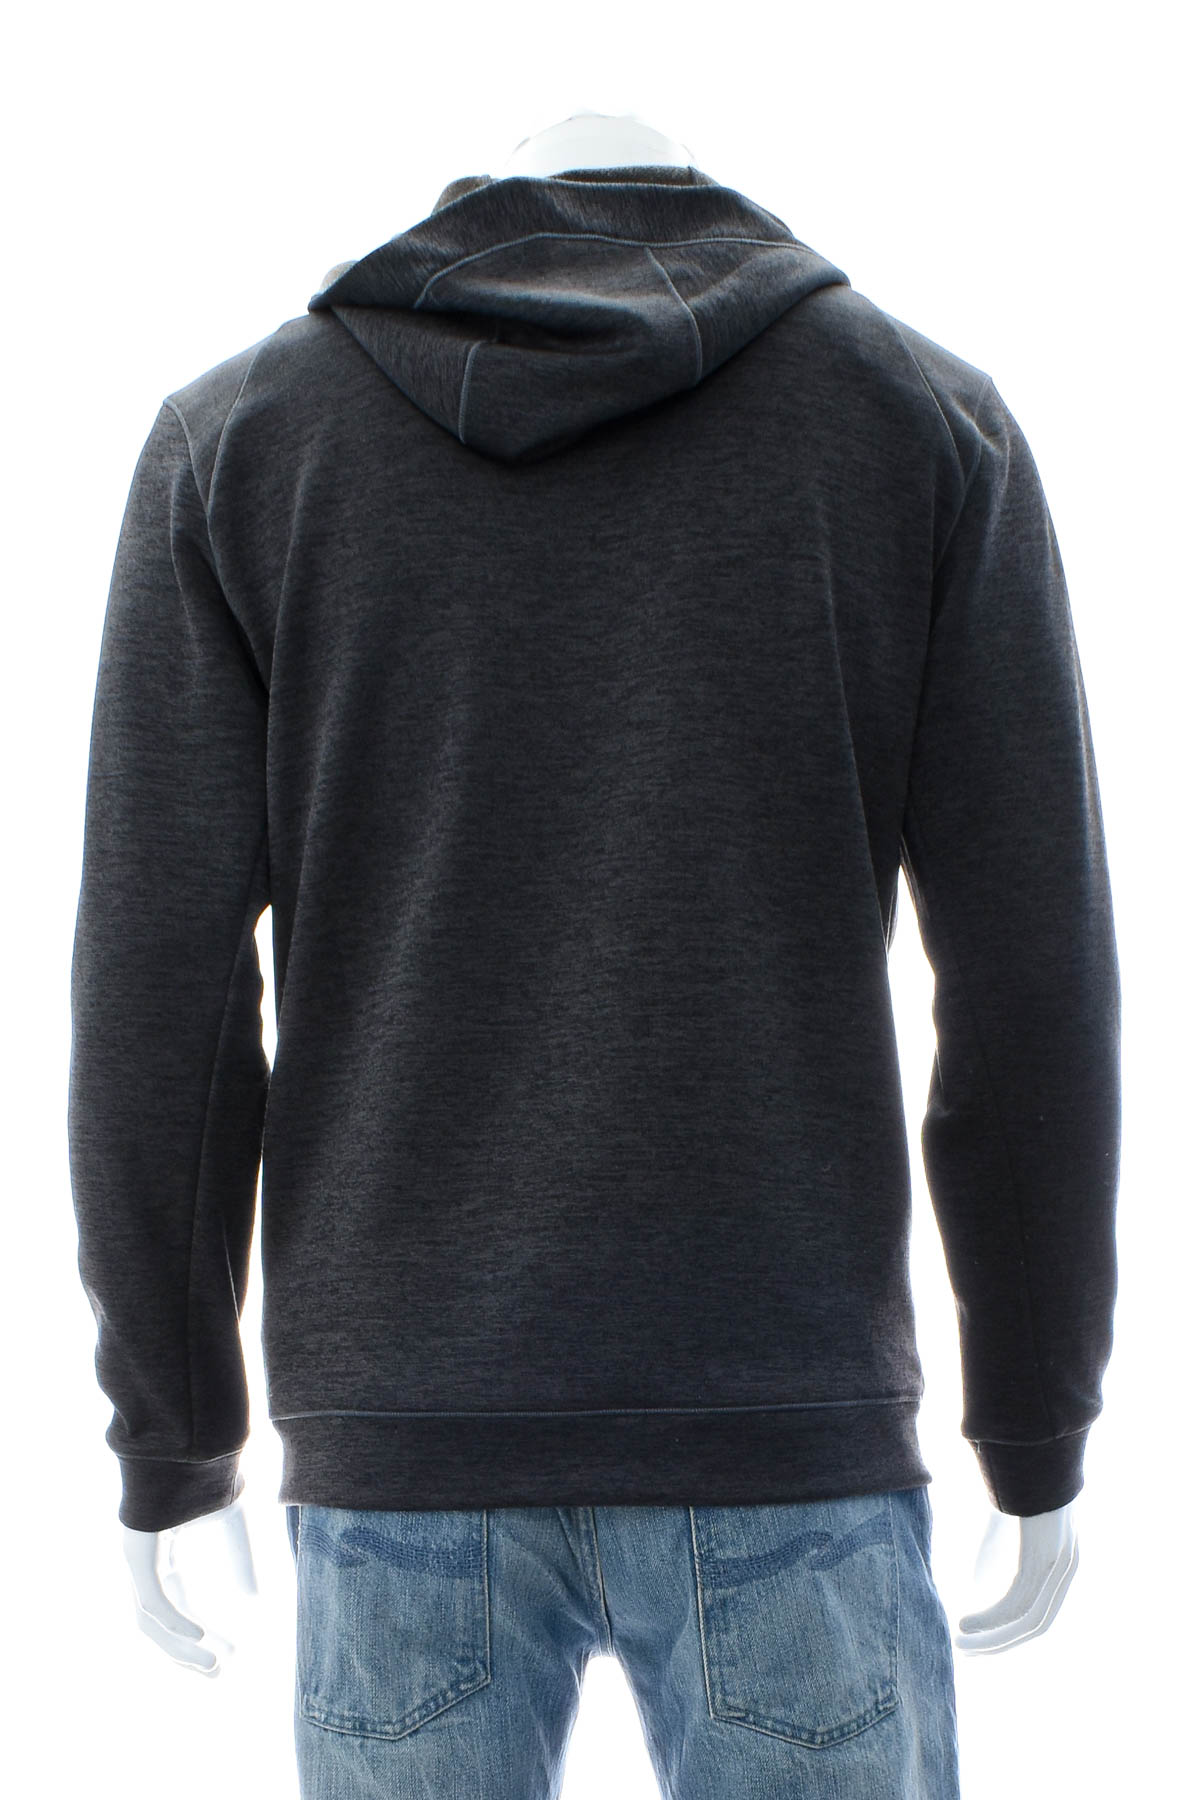 Men's sweatshirt - PUMA - 1